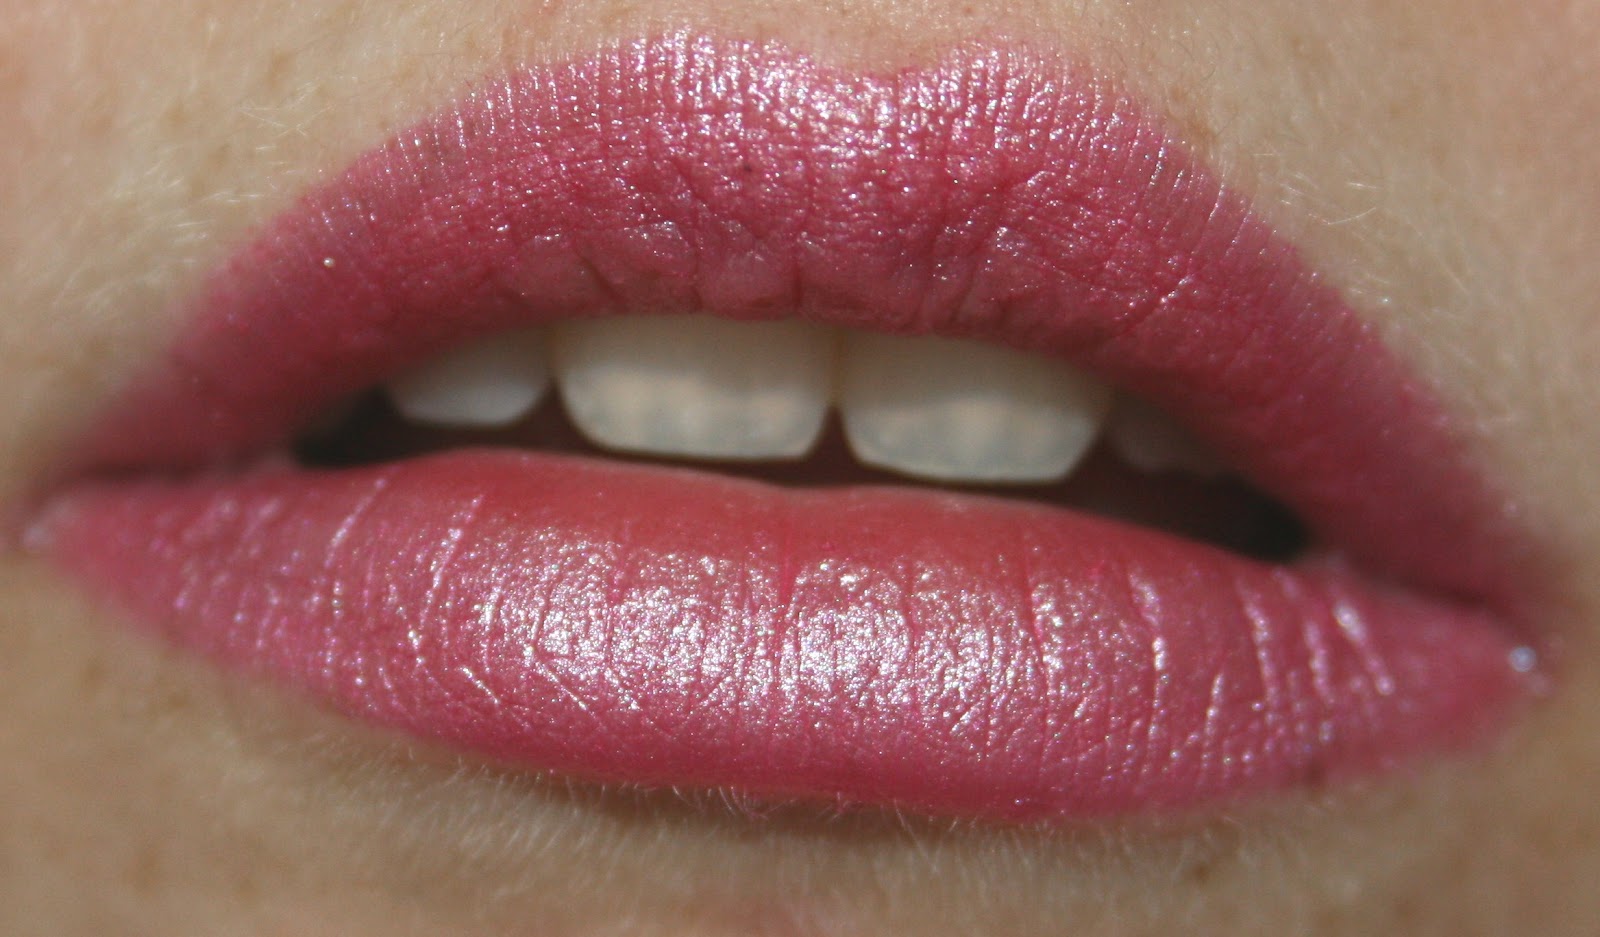 MAKE UP FOR EVER ROUGE ARTIST NATURAL Moisturizing Soft Shine Lipstick -  Iridescent Copper Pink - Reviews